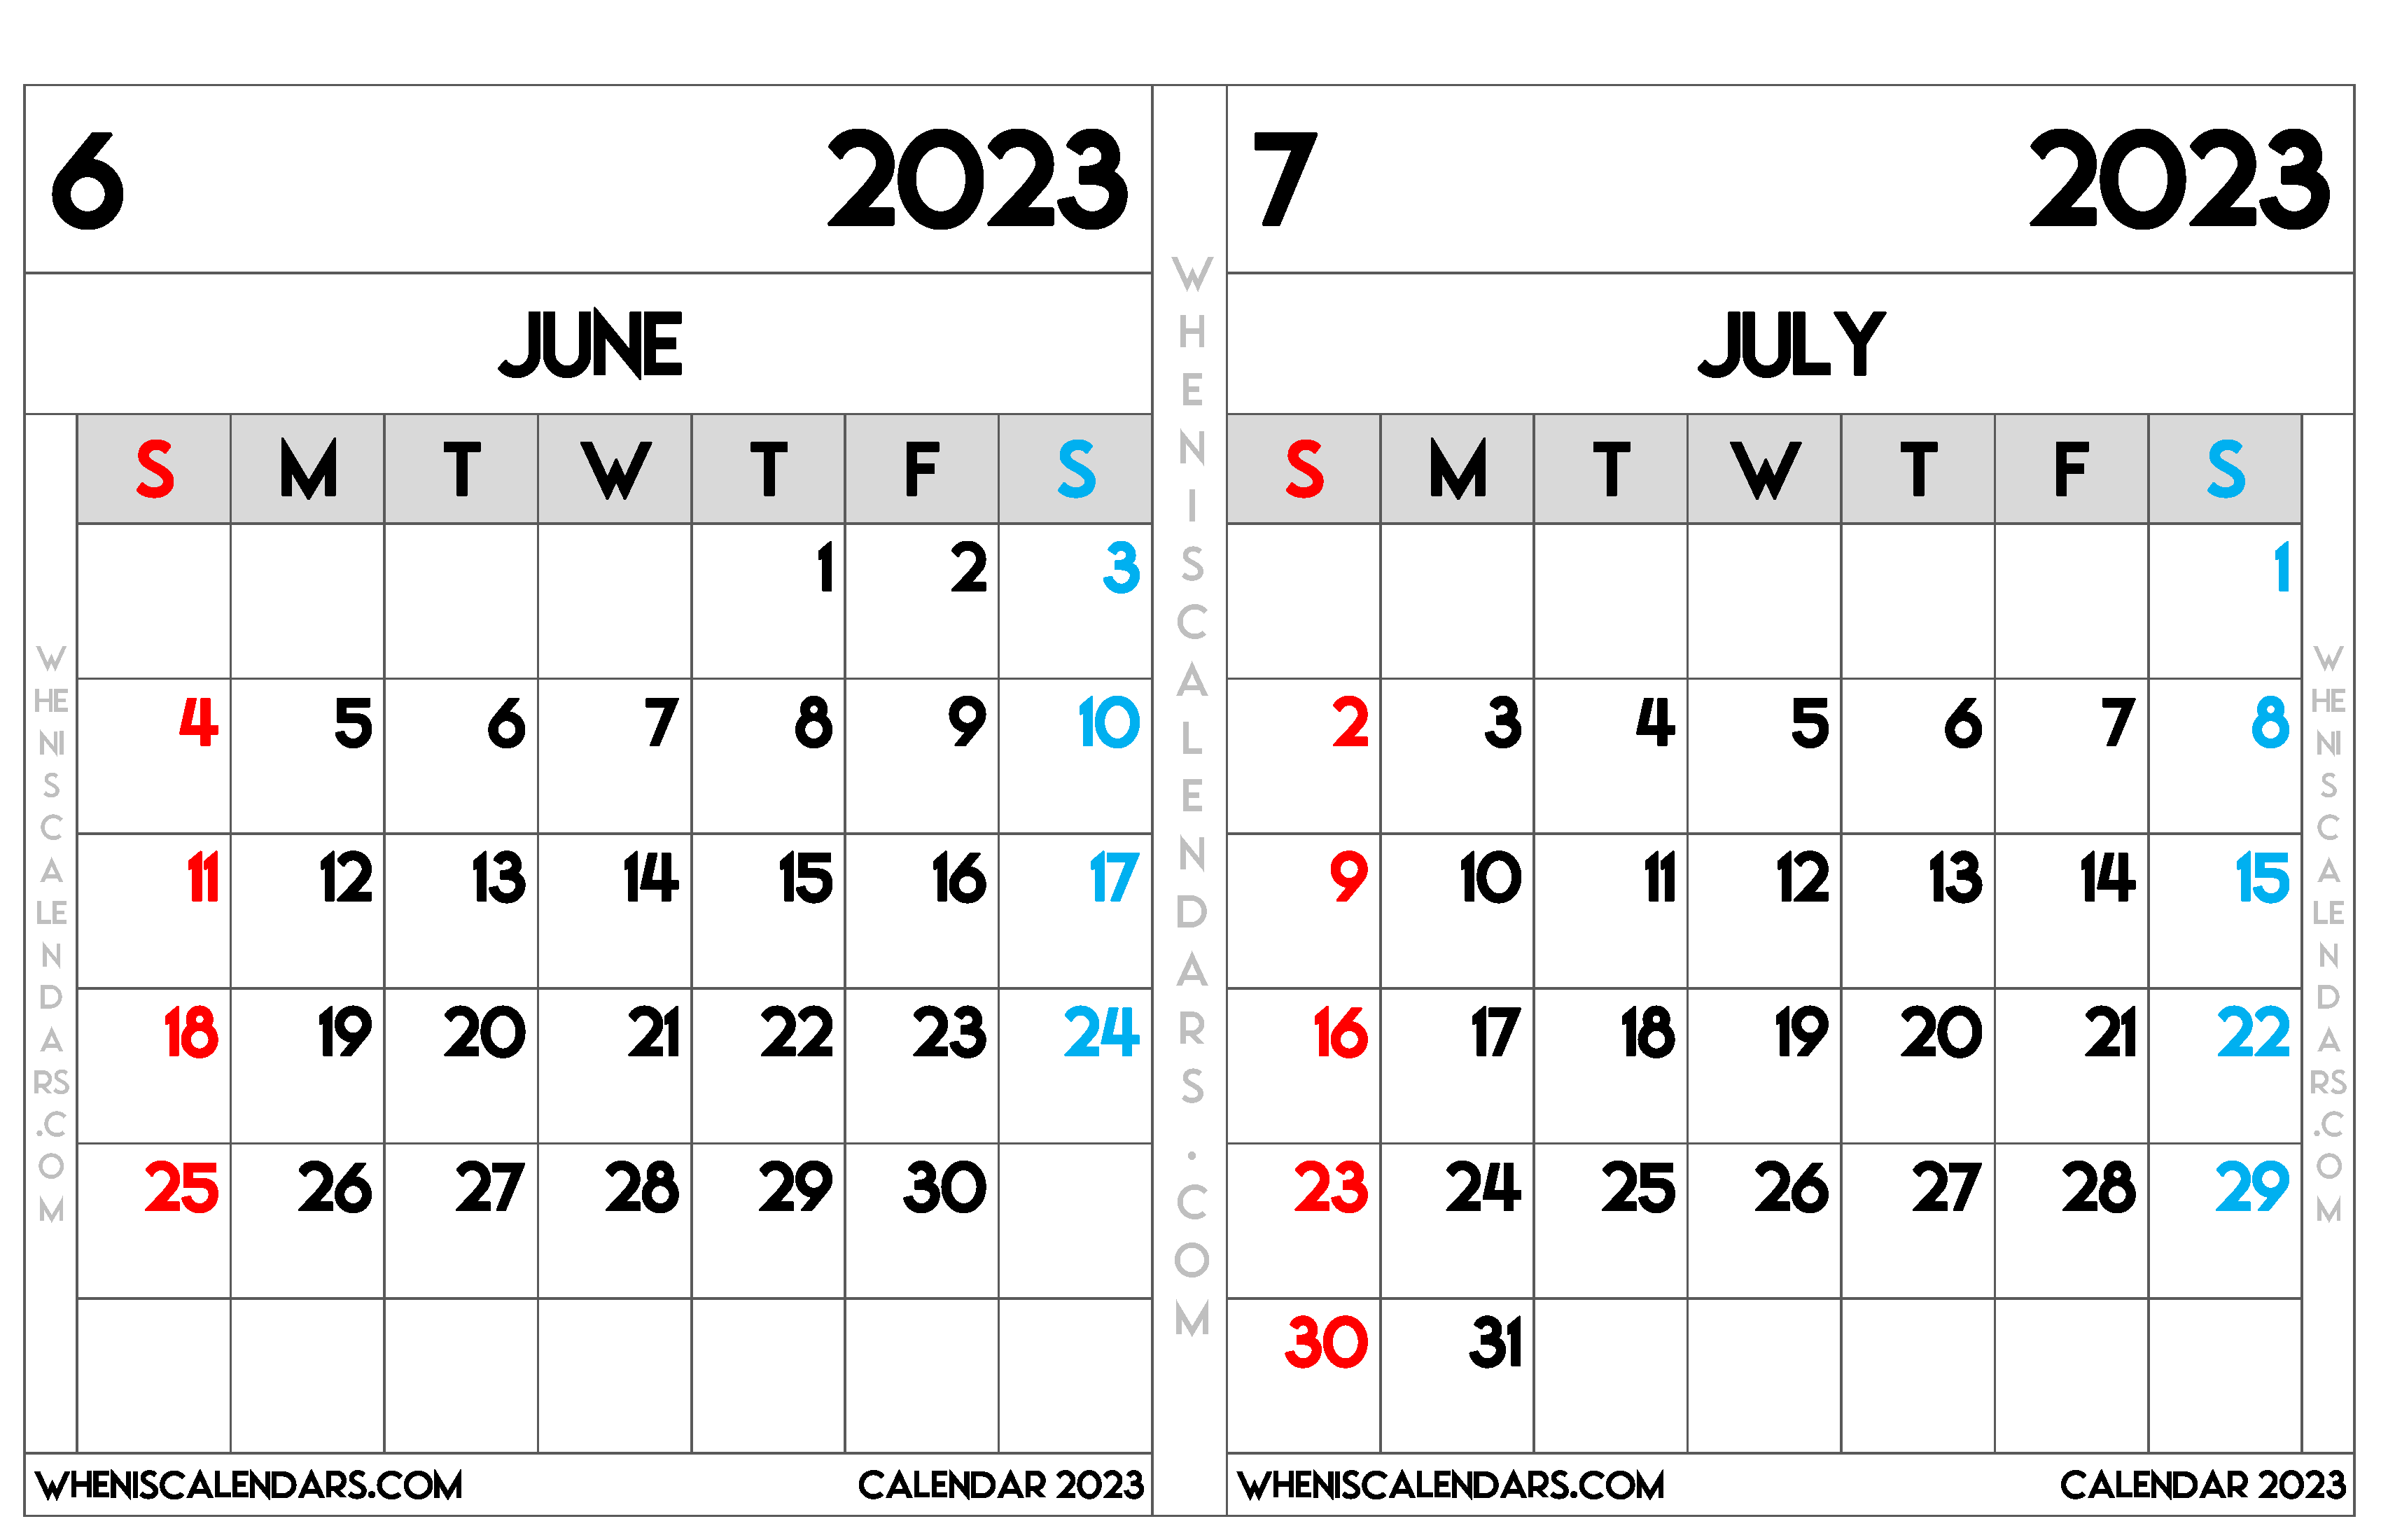 Download Free June July 2023 Calendar Printable as PDF and PNG Image